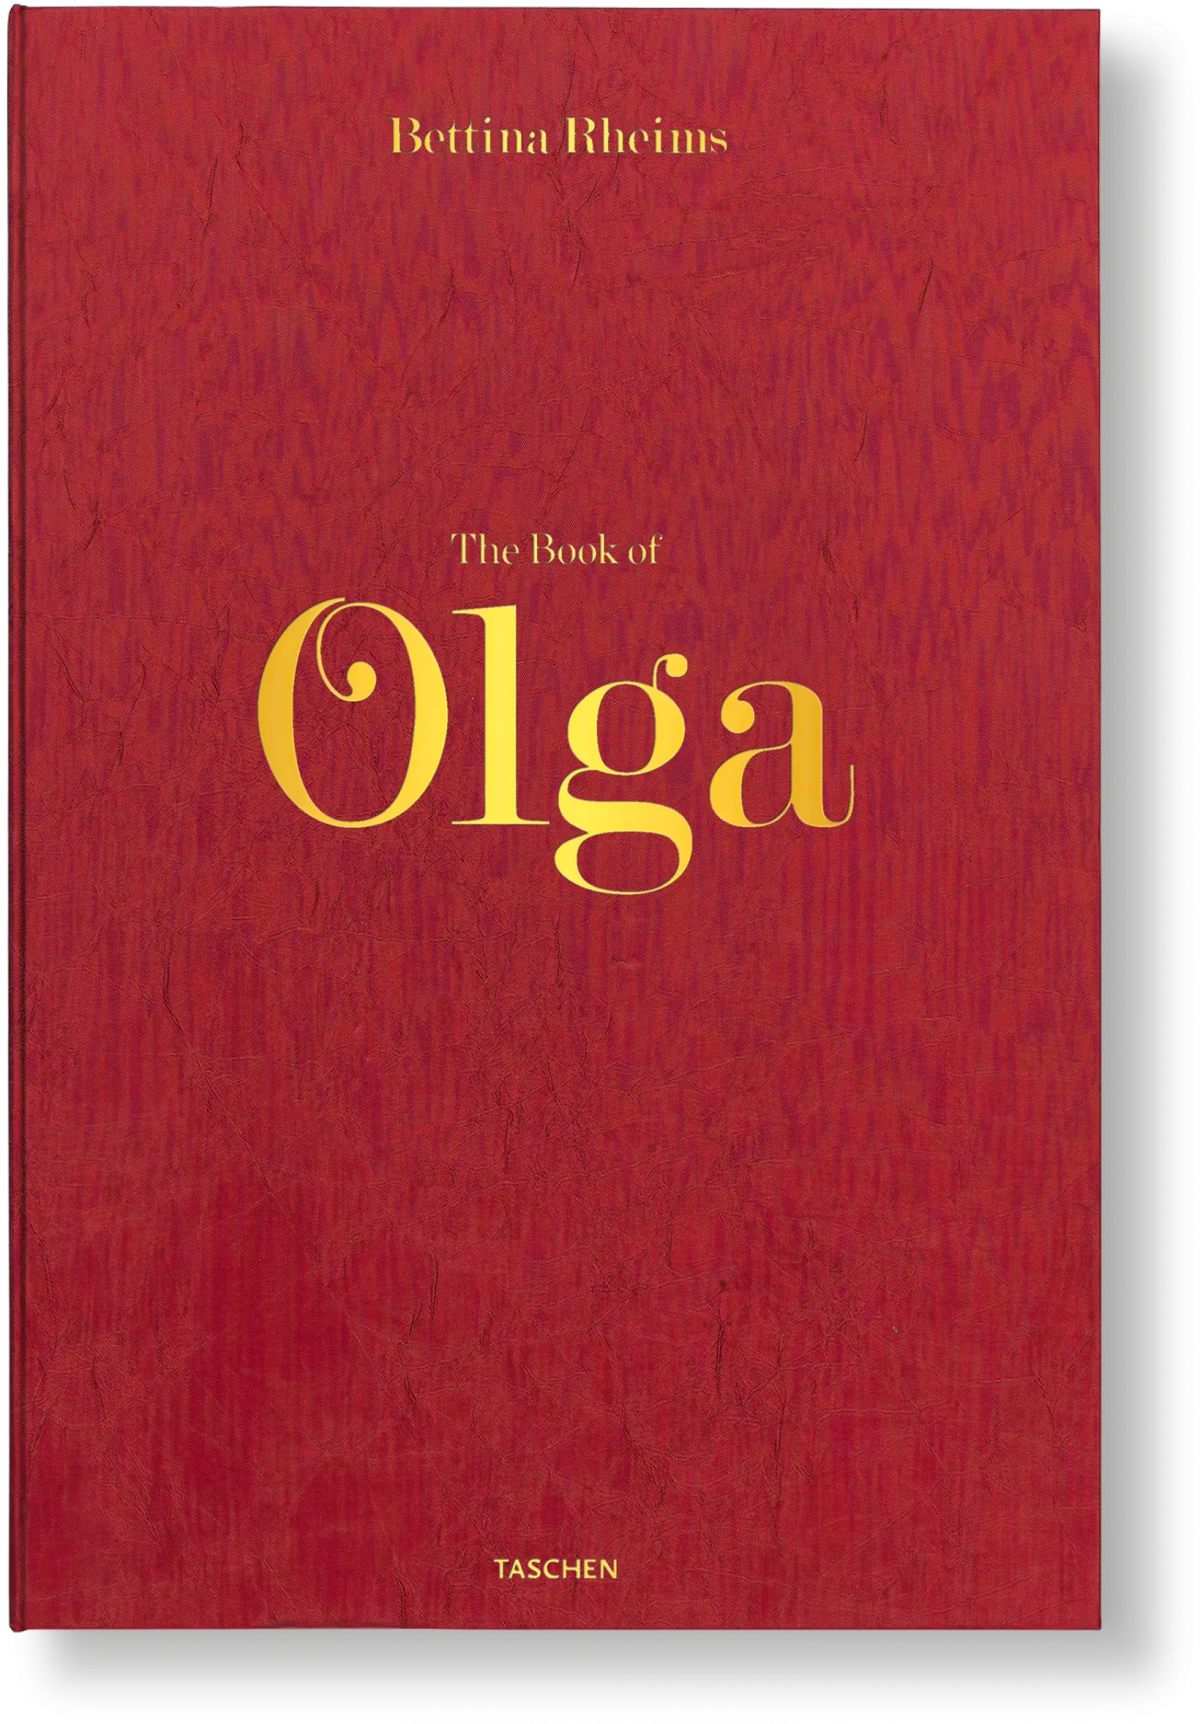 Bettina Rheims. The Book of Olga